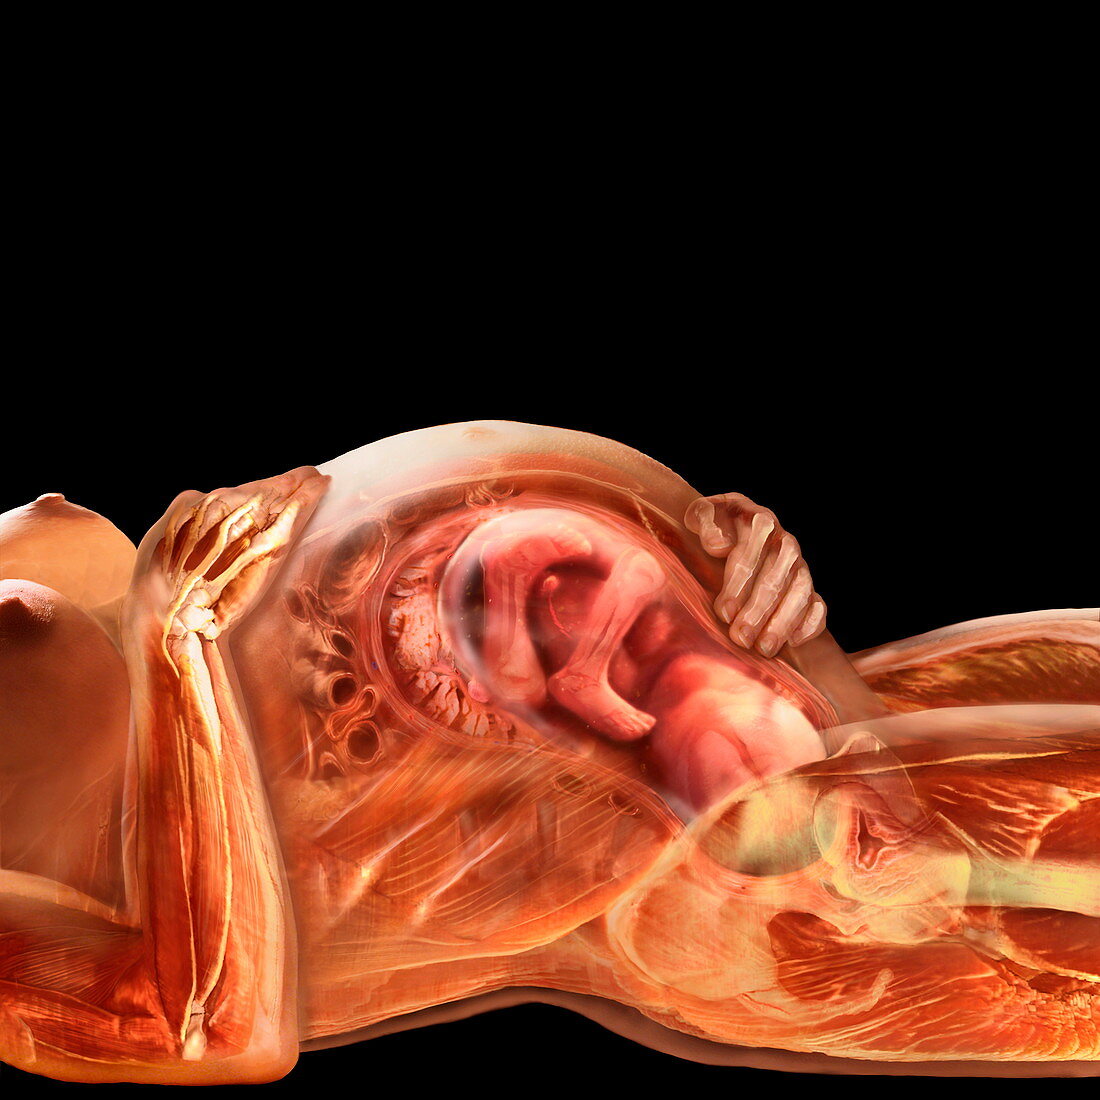 Anatomy of pregnant woman